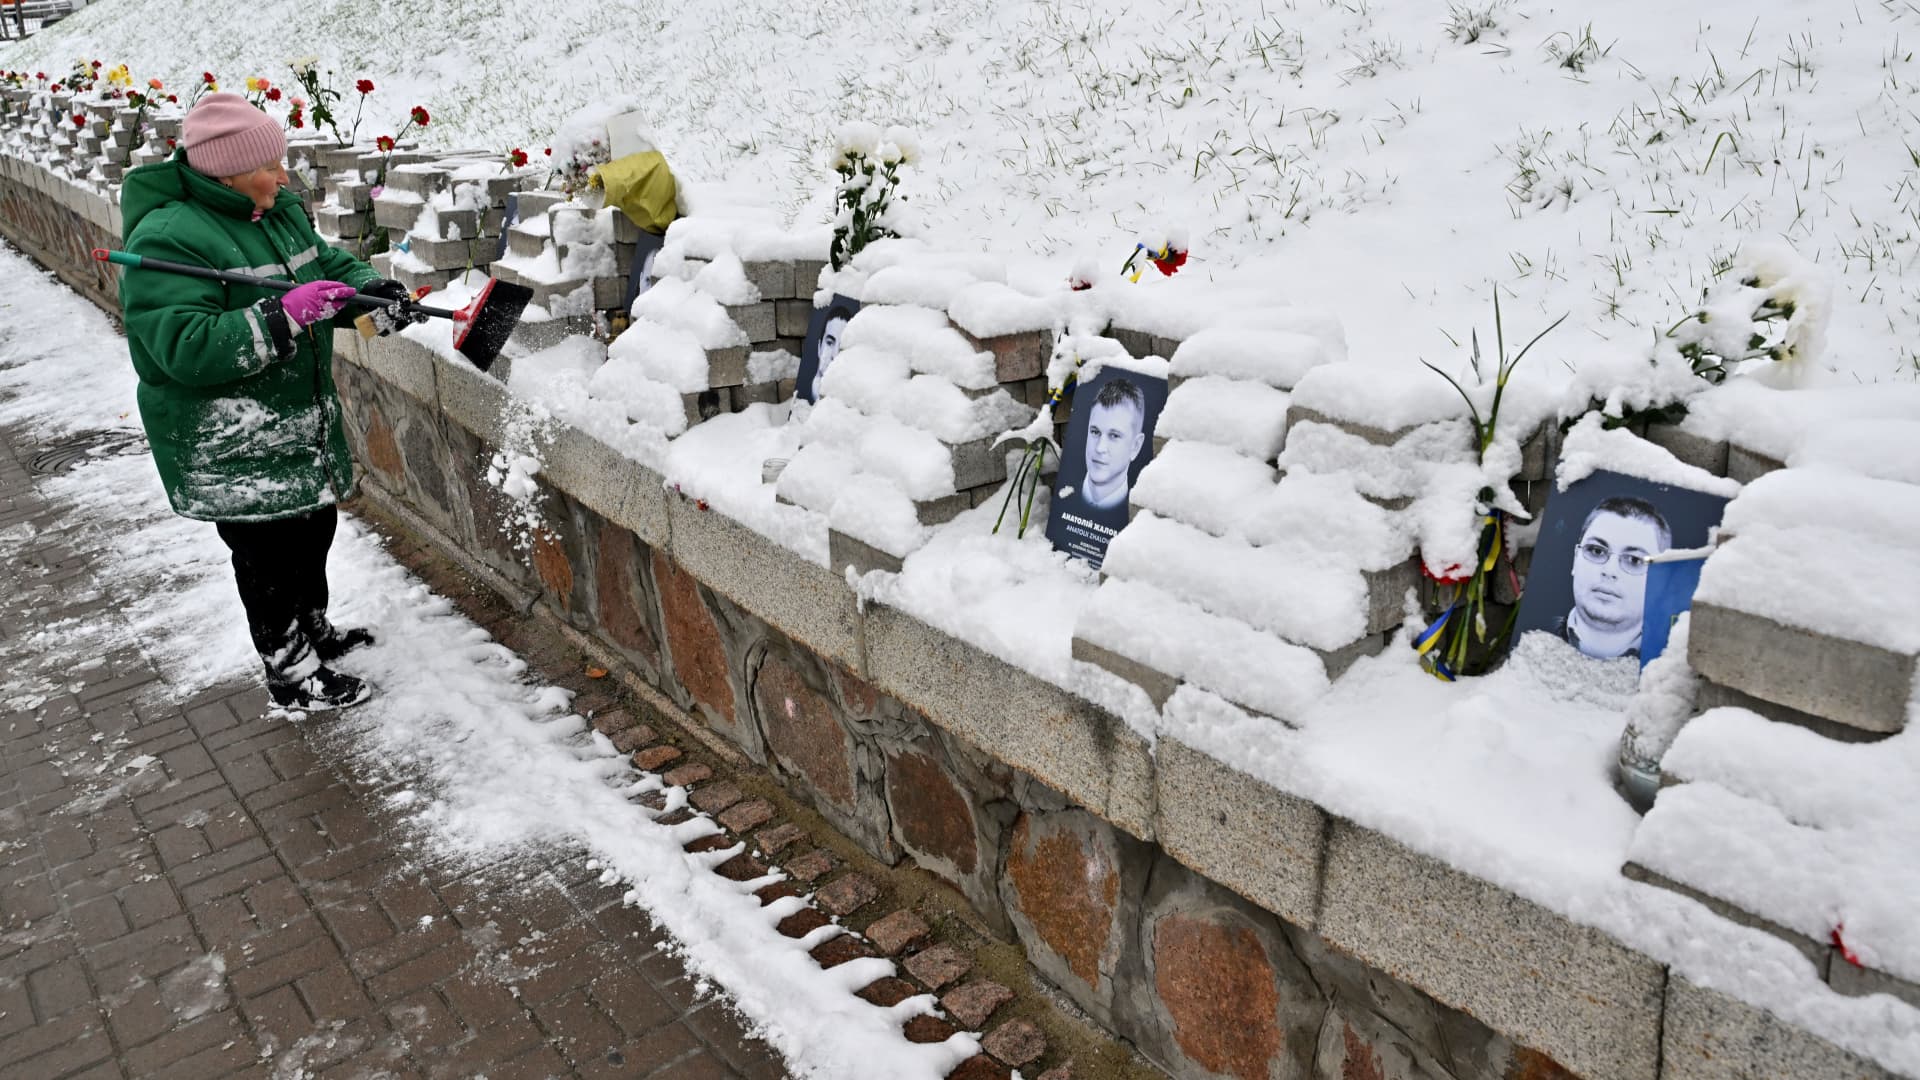 ukraine war live updates: winter storms batter russia and ukraine, wreaking havoc, death and destruction … but war continues